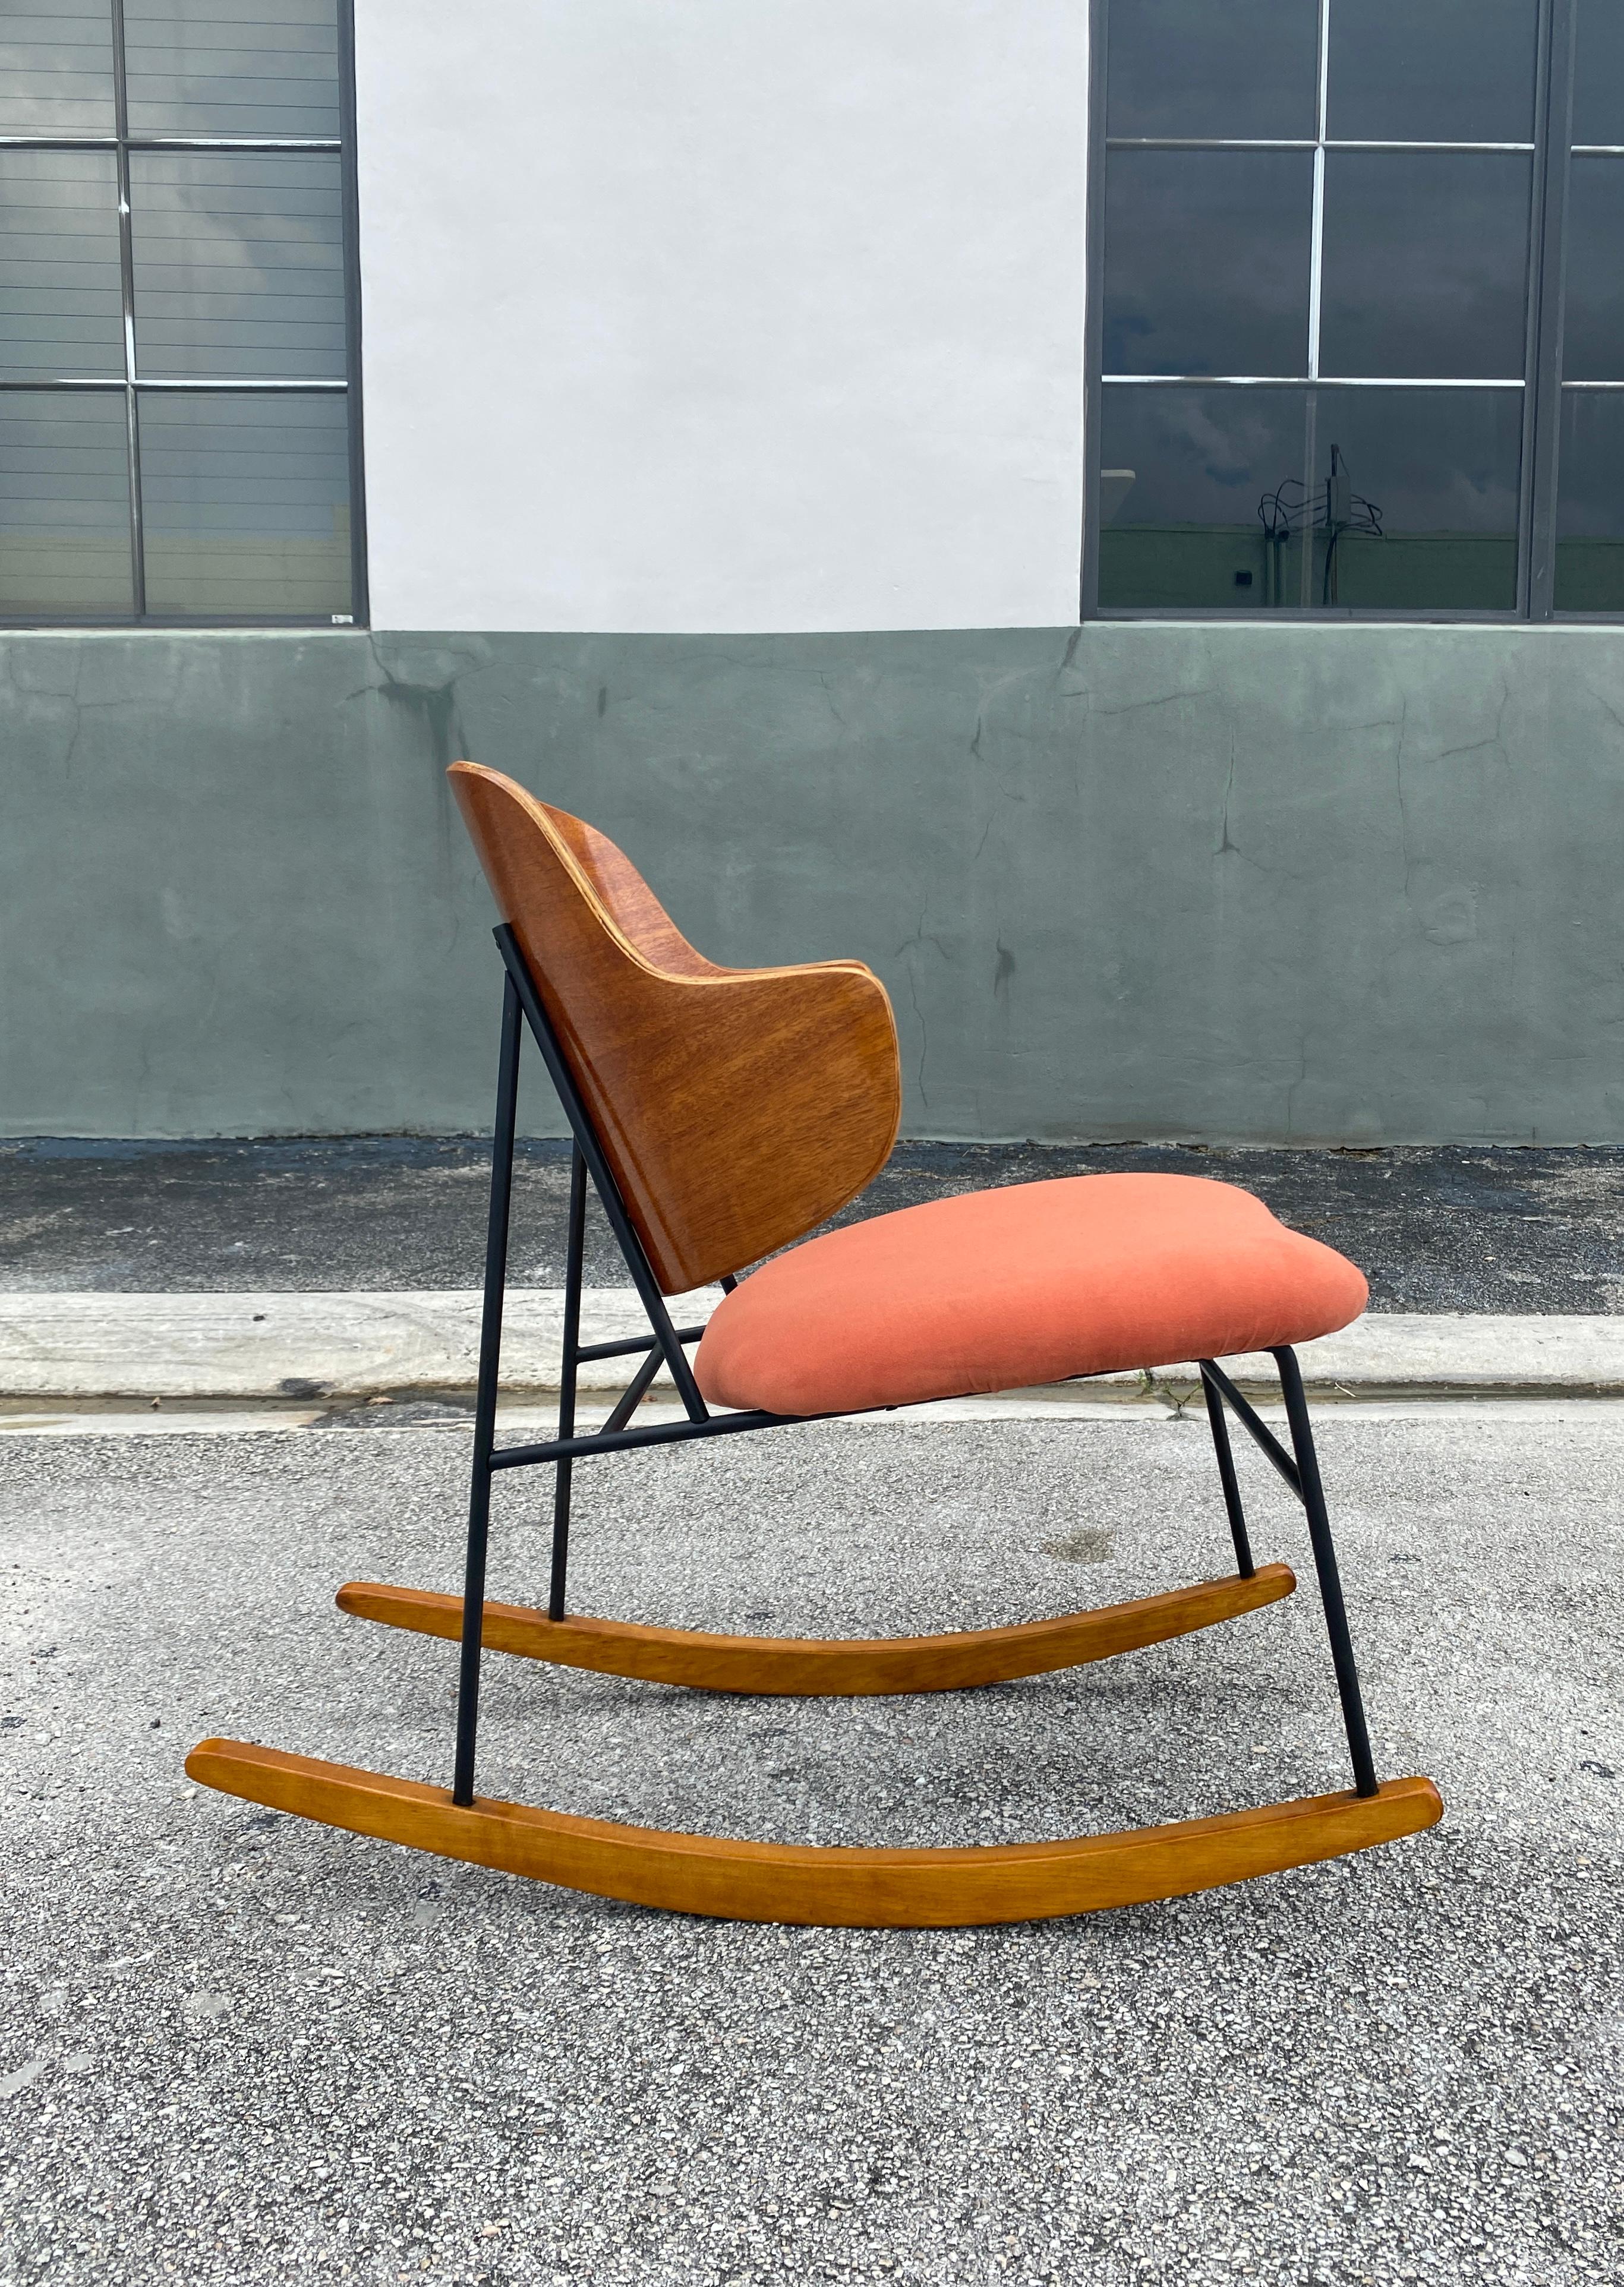 Fabric IB Kofod-Larsen 'Penguin' Danish Rocking Chair